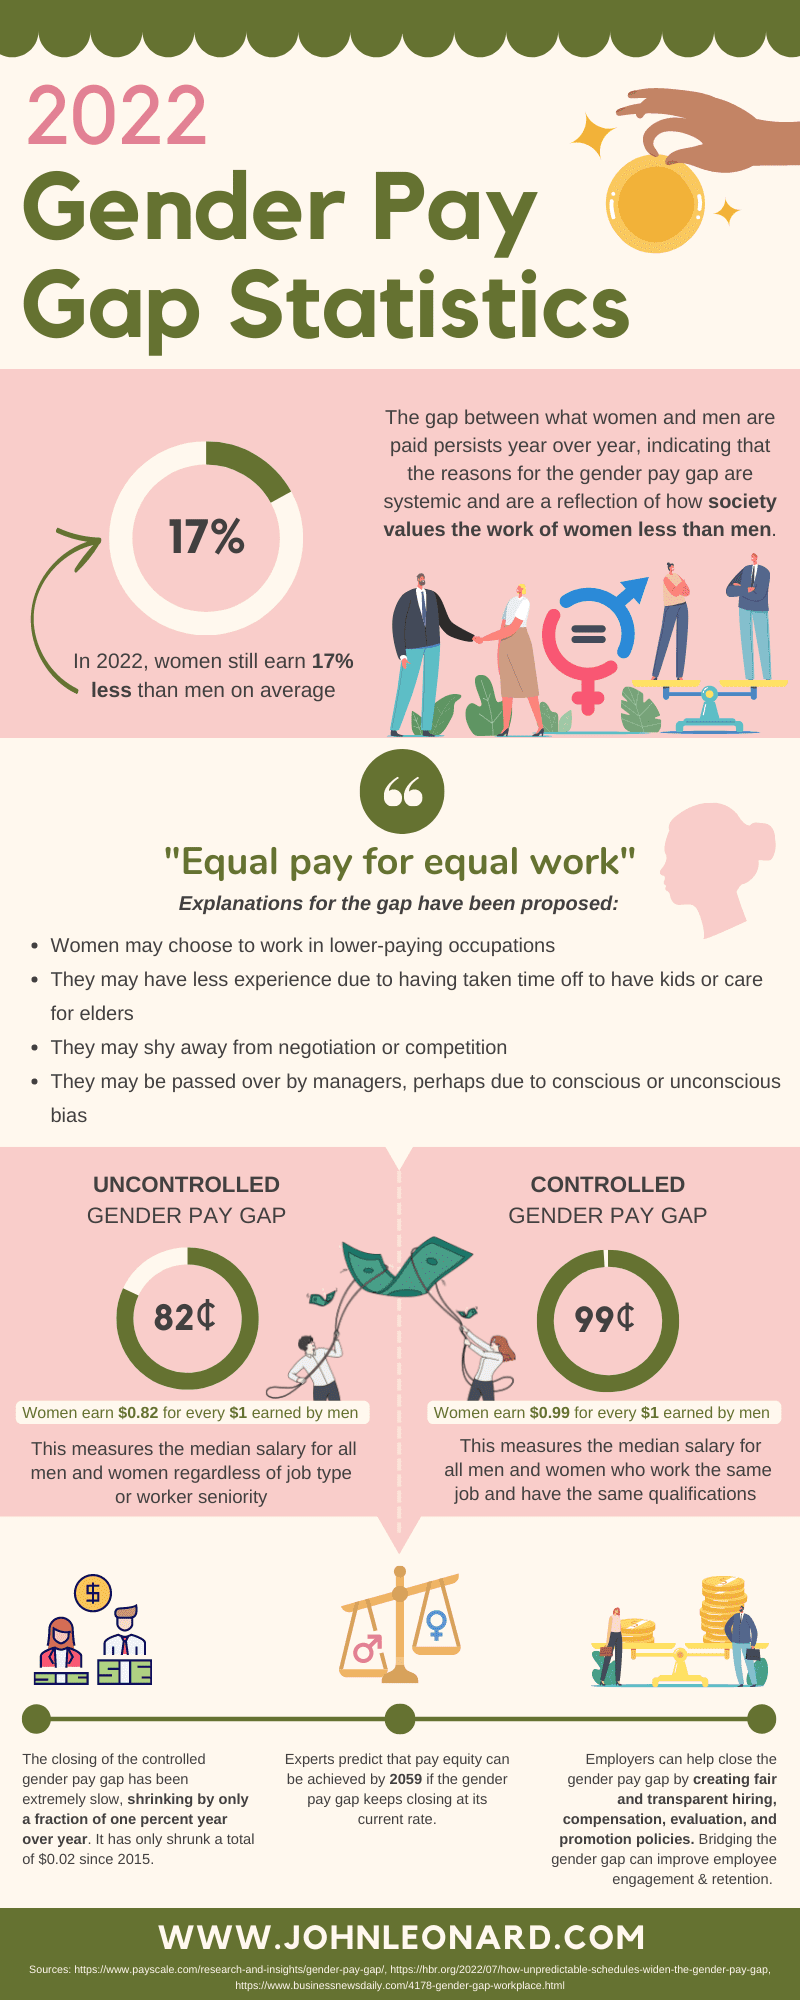 Gender Pay Gap 2022